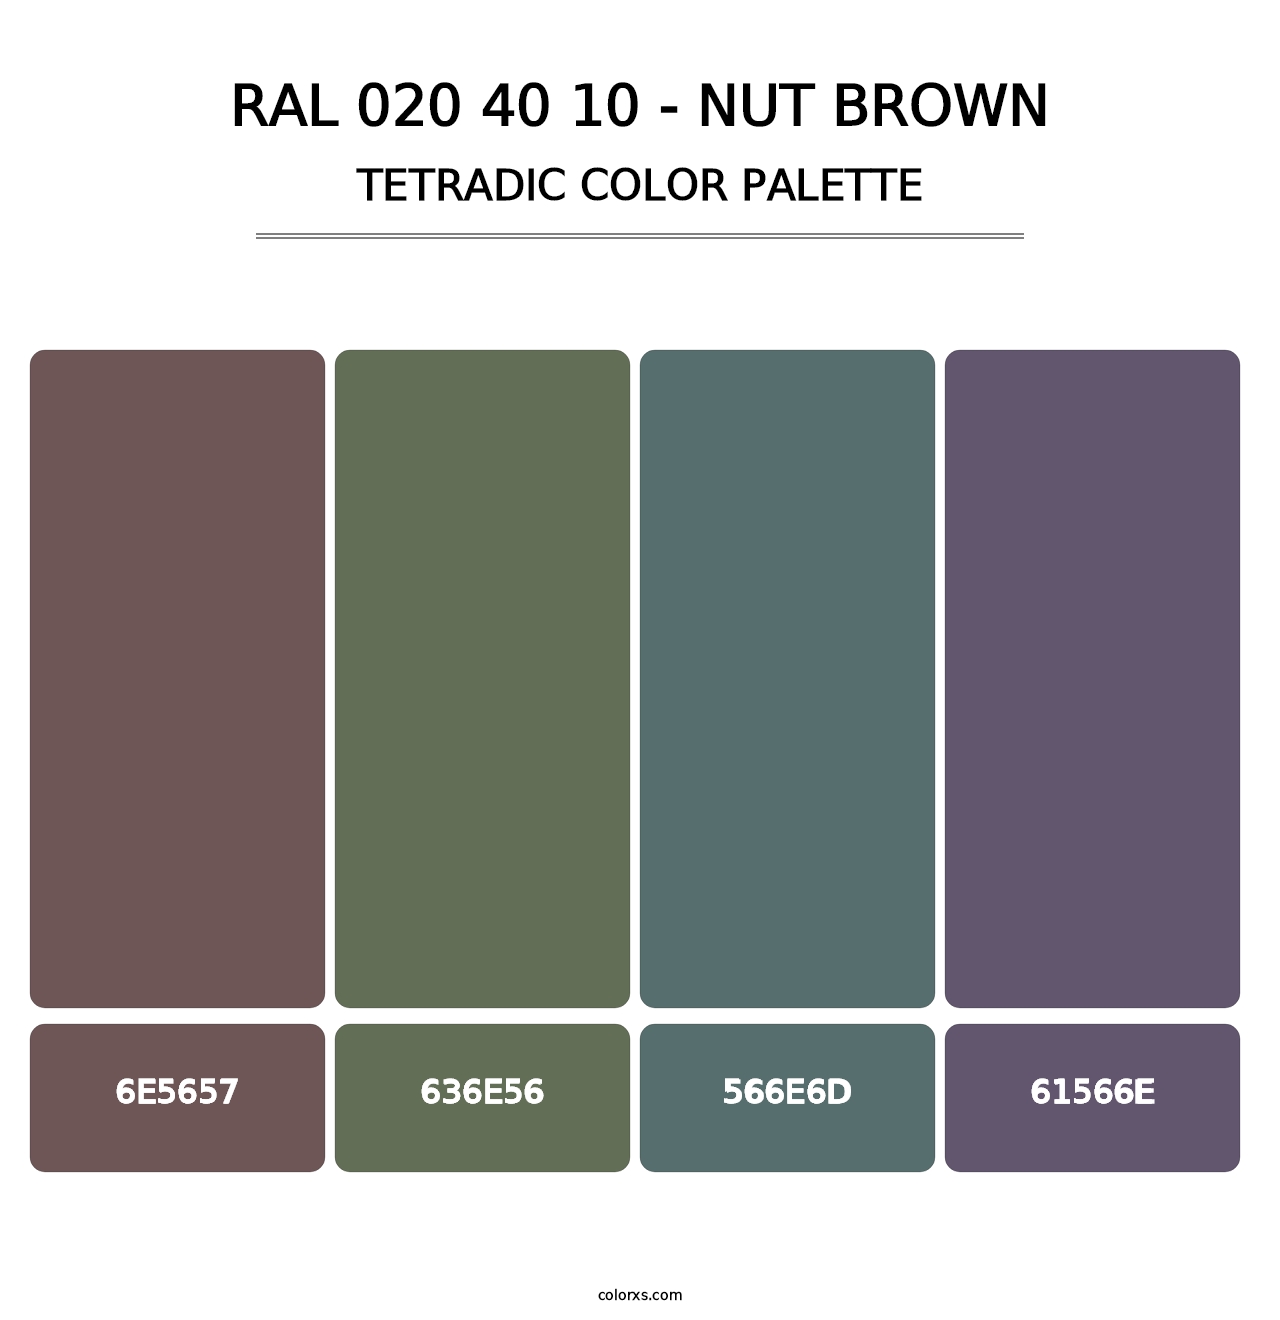 RAL 020 40 10 - Nut Brown - Tetradic Color Palette